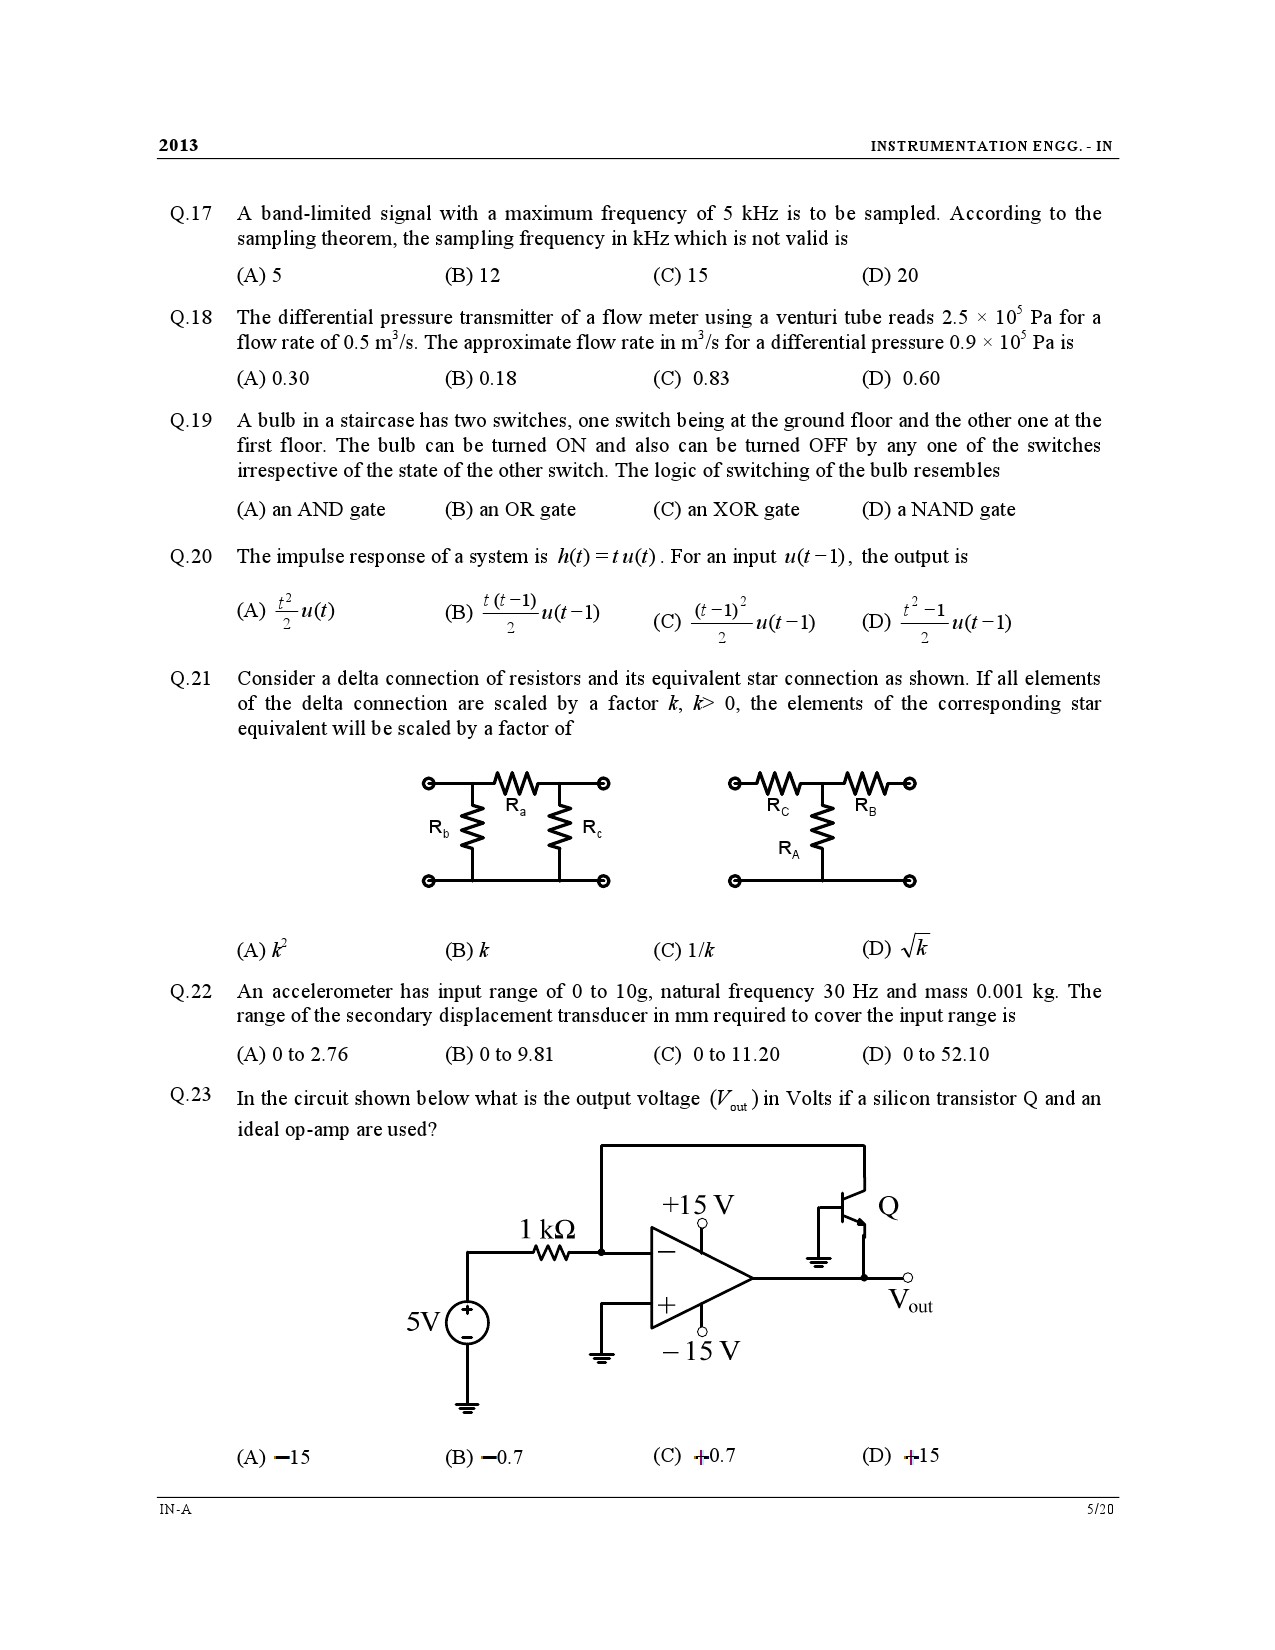 GATE Exam Question Paper 2013 Instrumentation Engineering 5